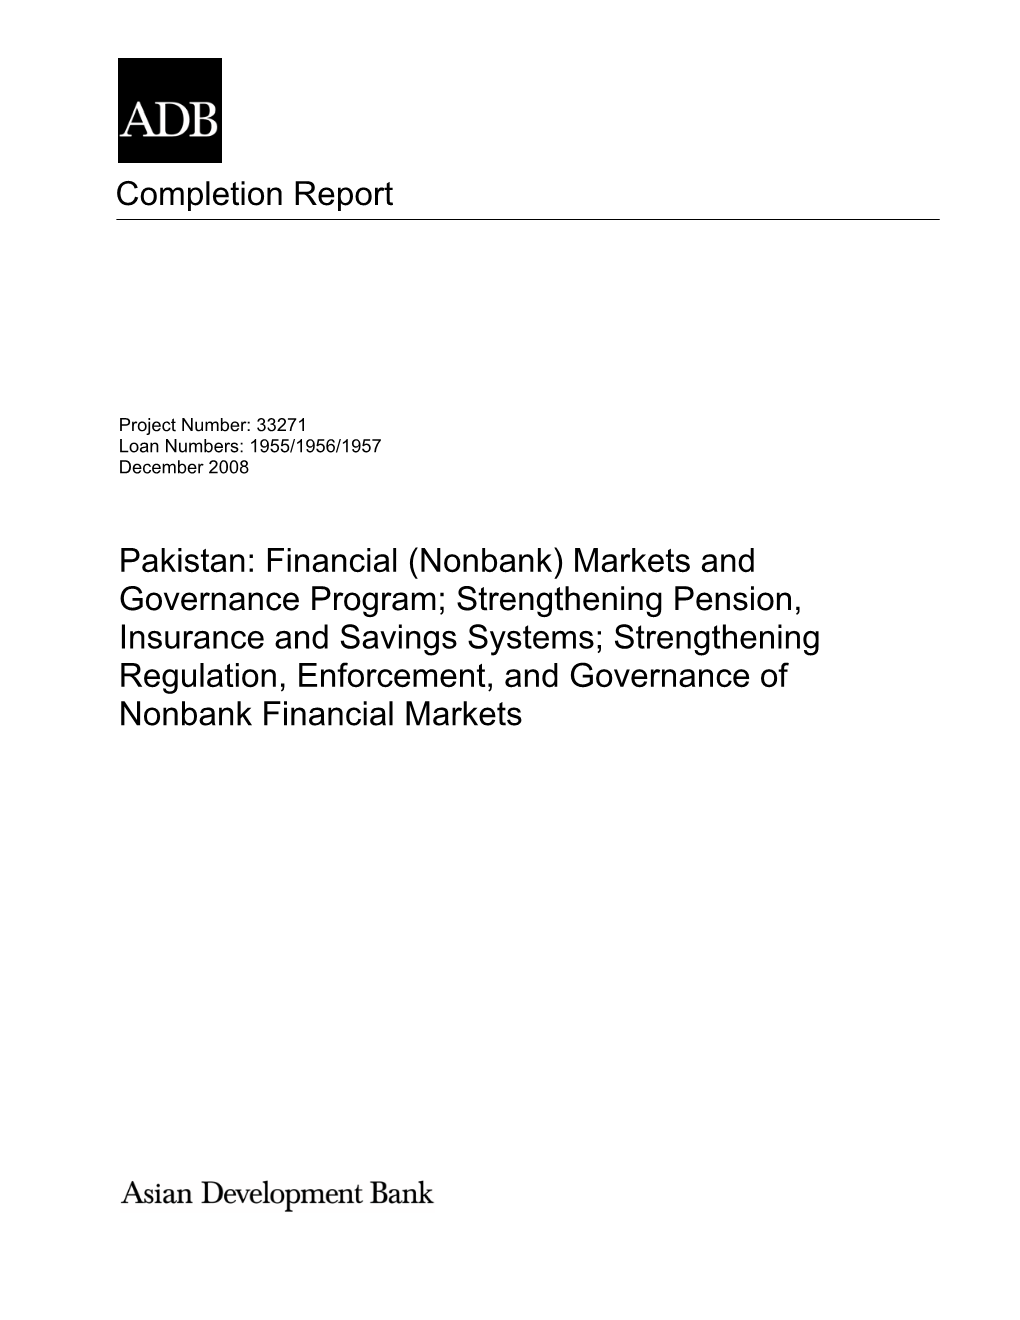 Financial (Nonbank) Markets and Governance Program